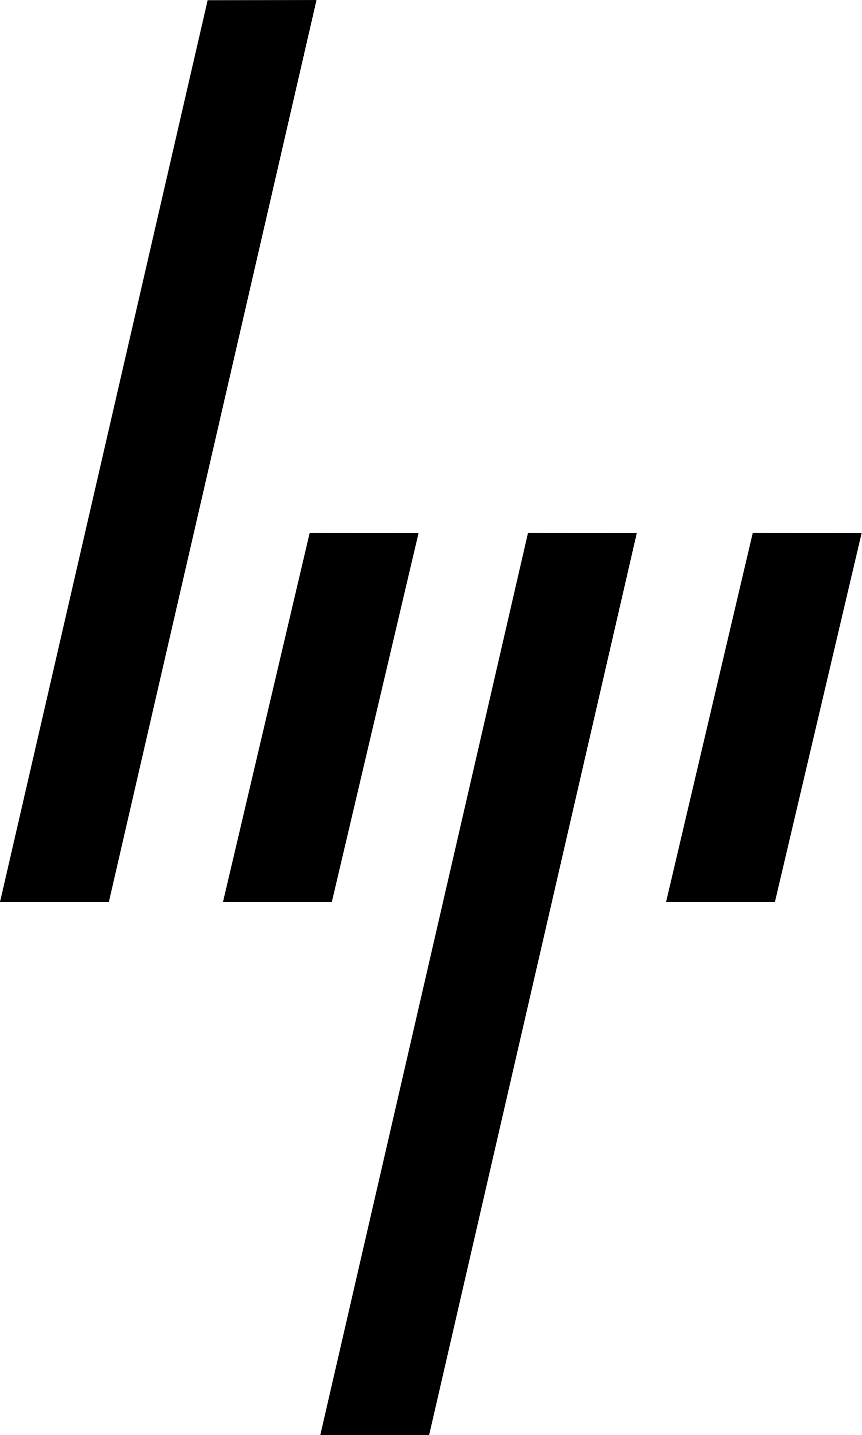 New HP Logo - Image - Hp alt 2016.png | Logopedia | FANDOM powered by Wikia